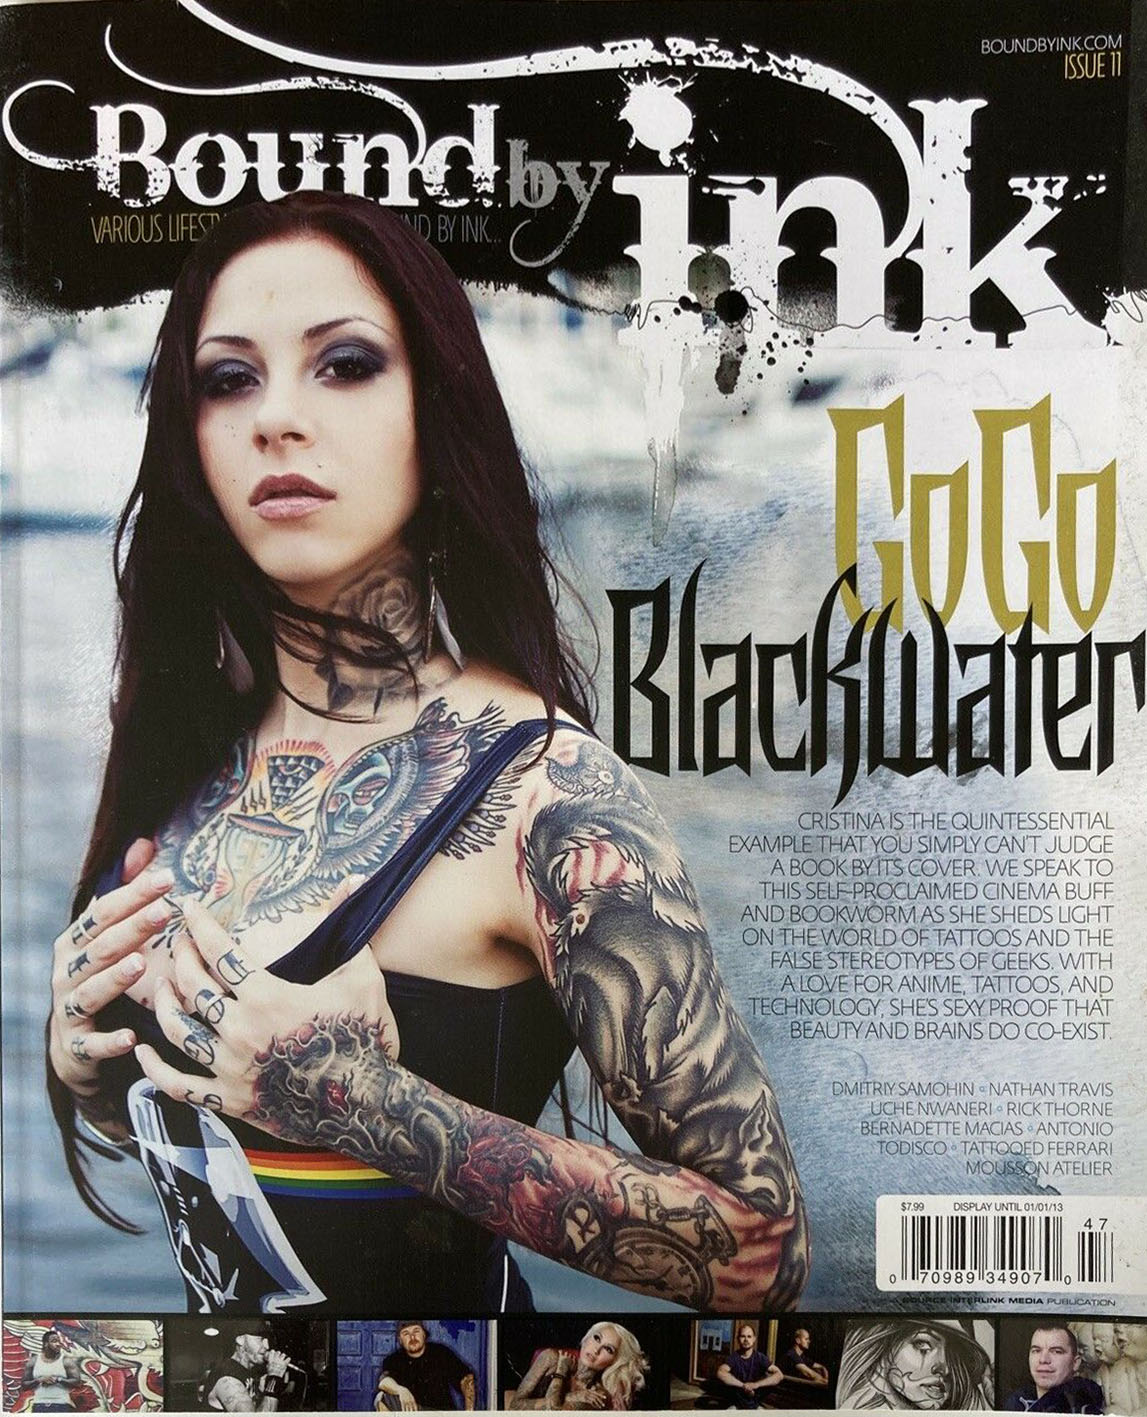 Ink # 11 magazine reviews